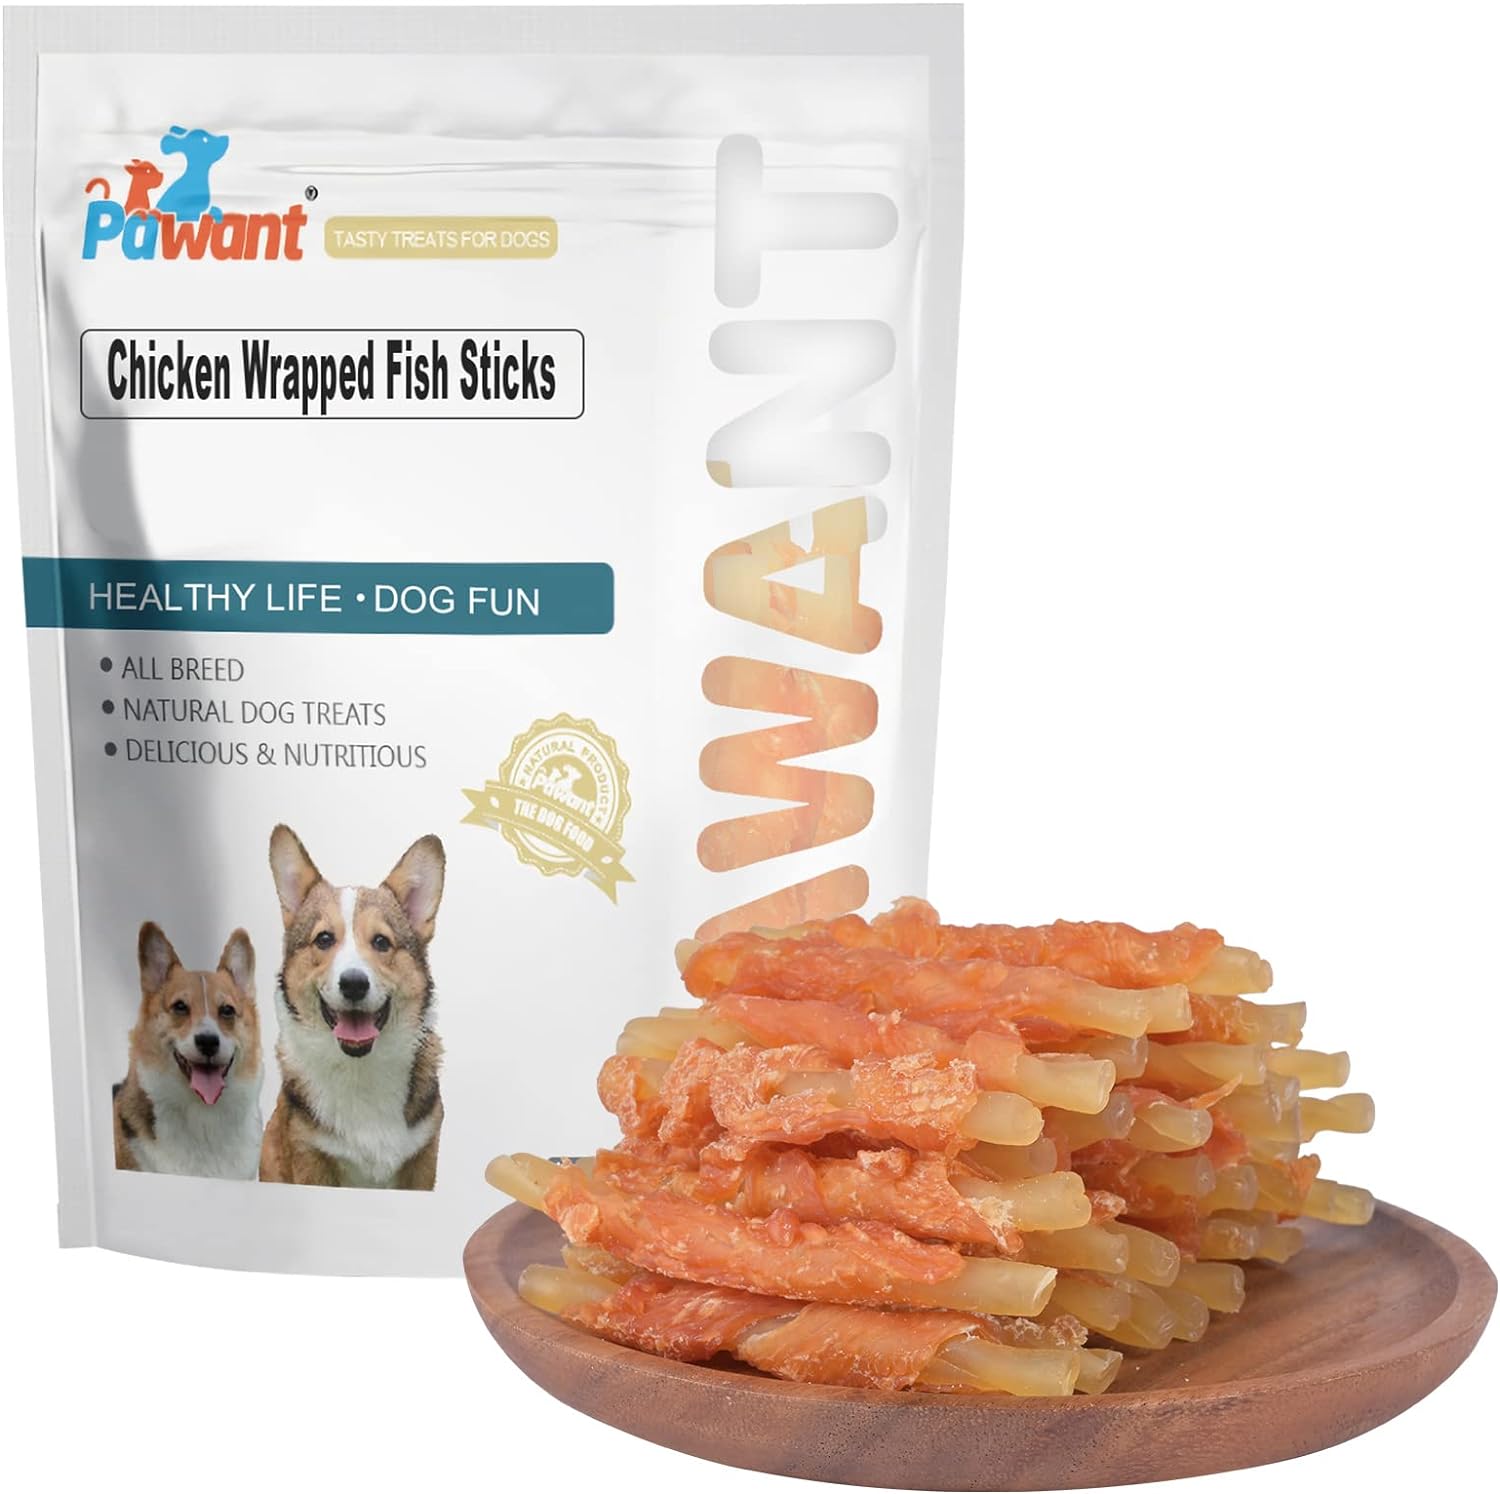 Dog Treats Soft Chews Rawhide Free Chicken Wrapped Cod Sticks for Puppy Training Snacks Dog Chews Treats 0.5lb/227g